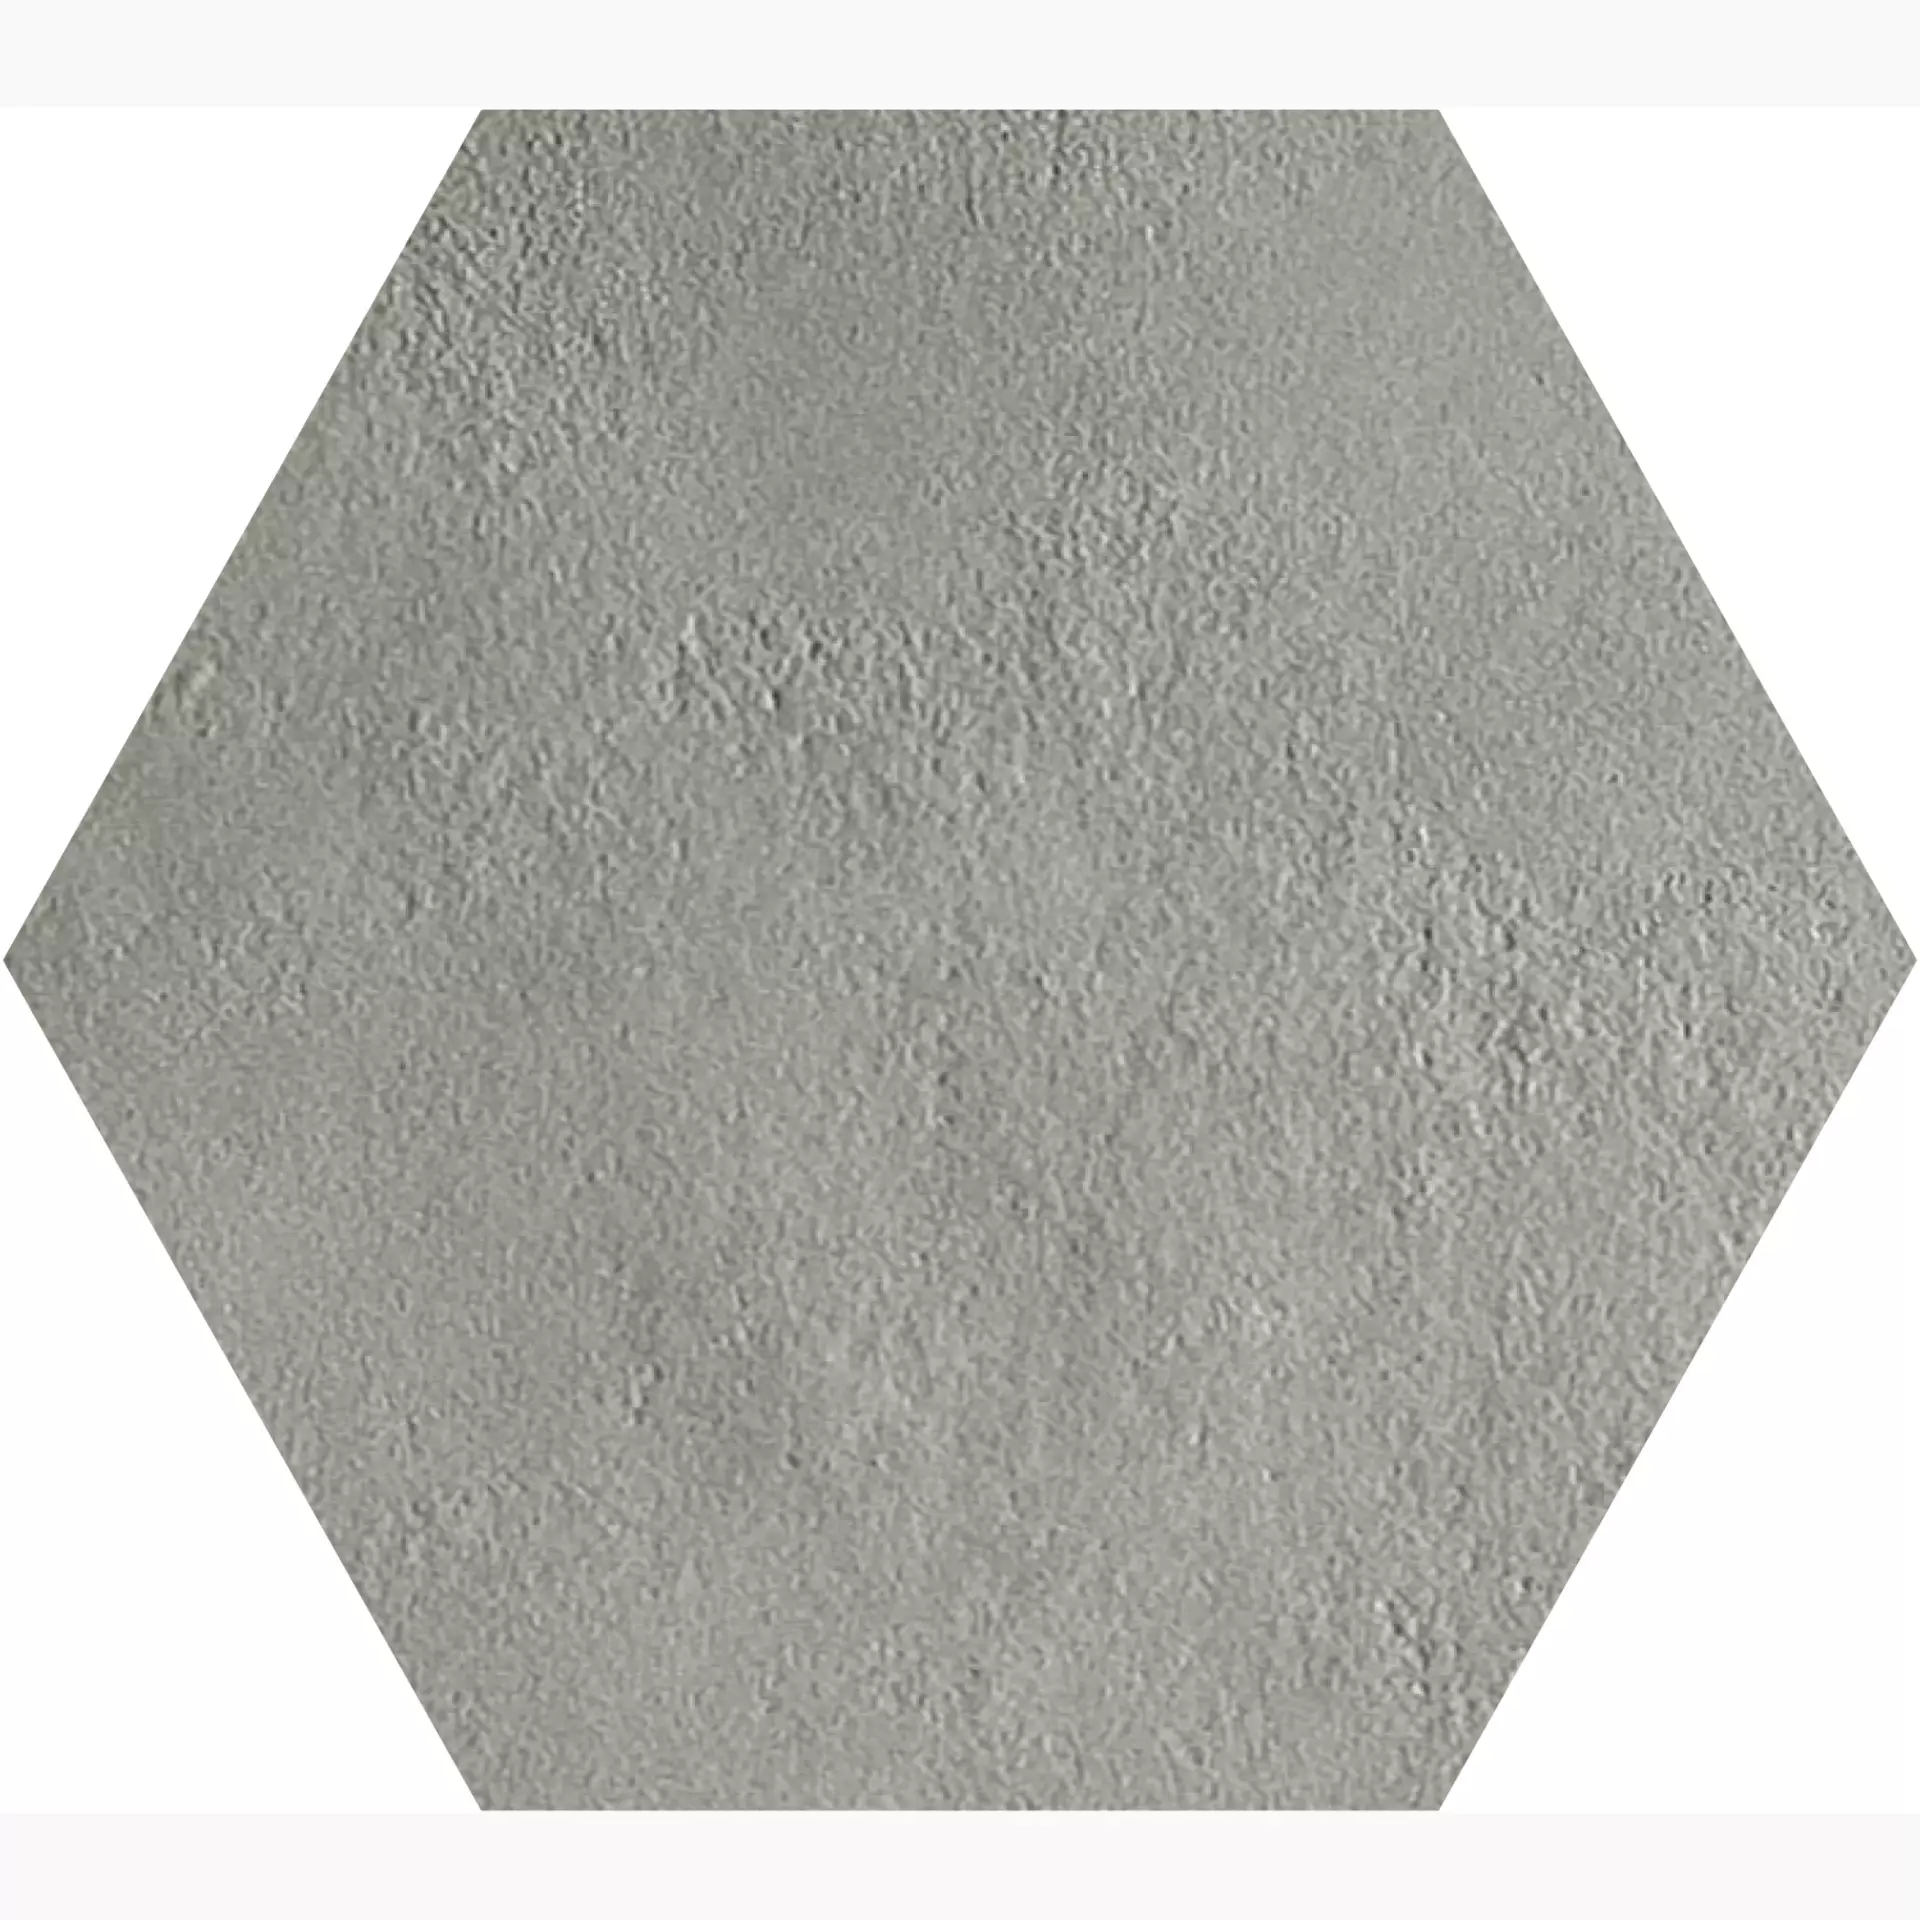 Gigacer Argilla Dry Material Dry PO9ESADRY matt 16x18cm Dekor Small Hexagon 6mm